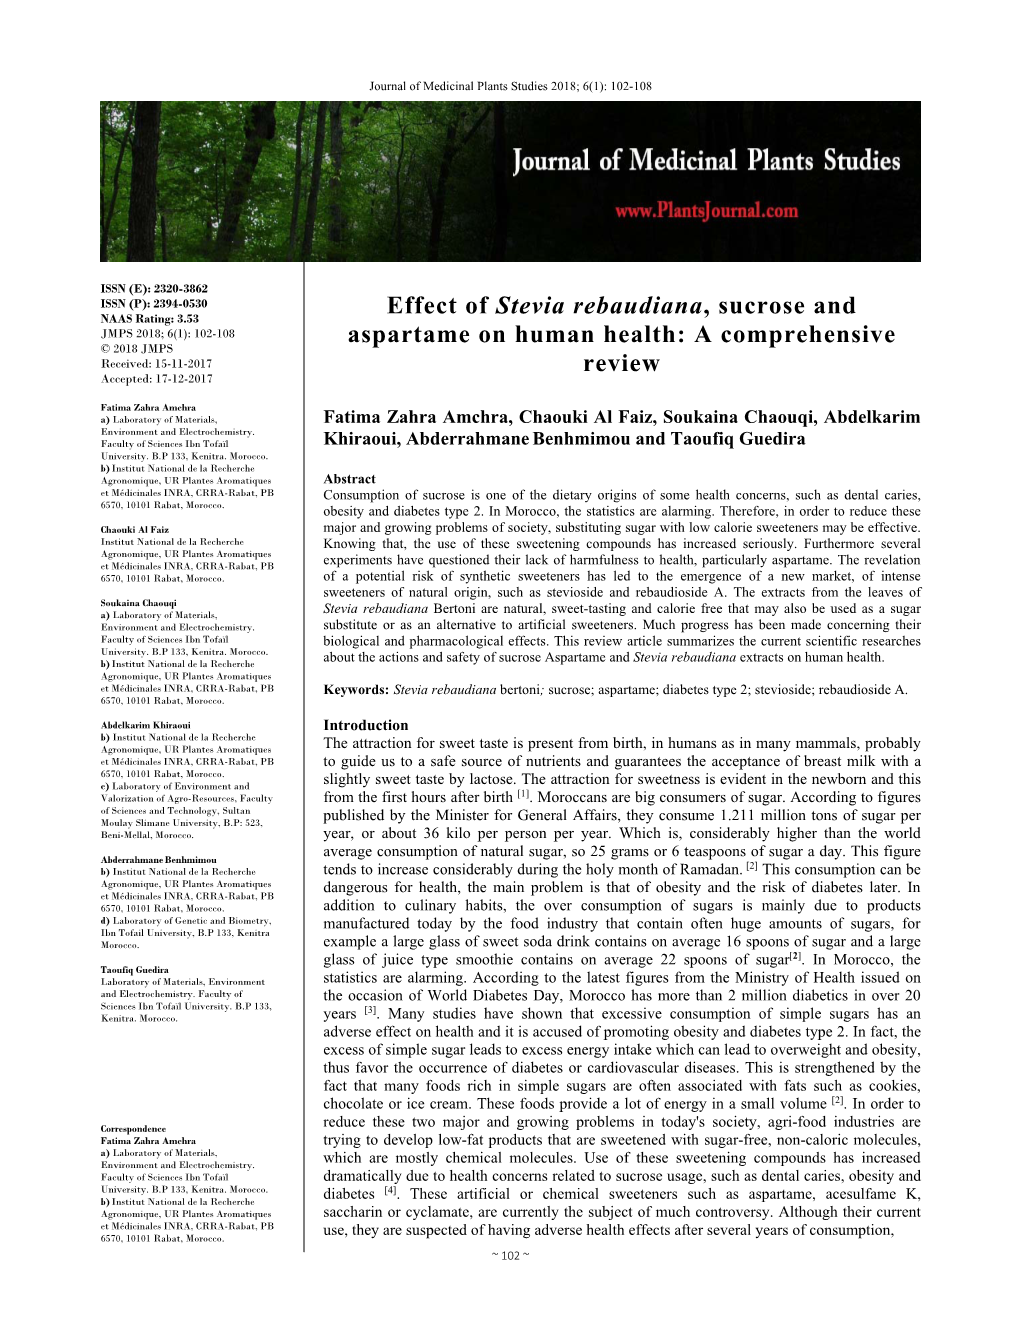 Effect of Stevia Rebaudiana, Sucrose and Aspartame on Human Health